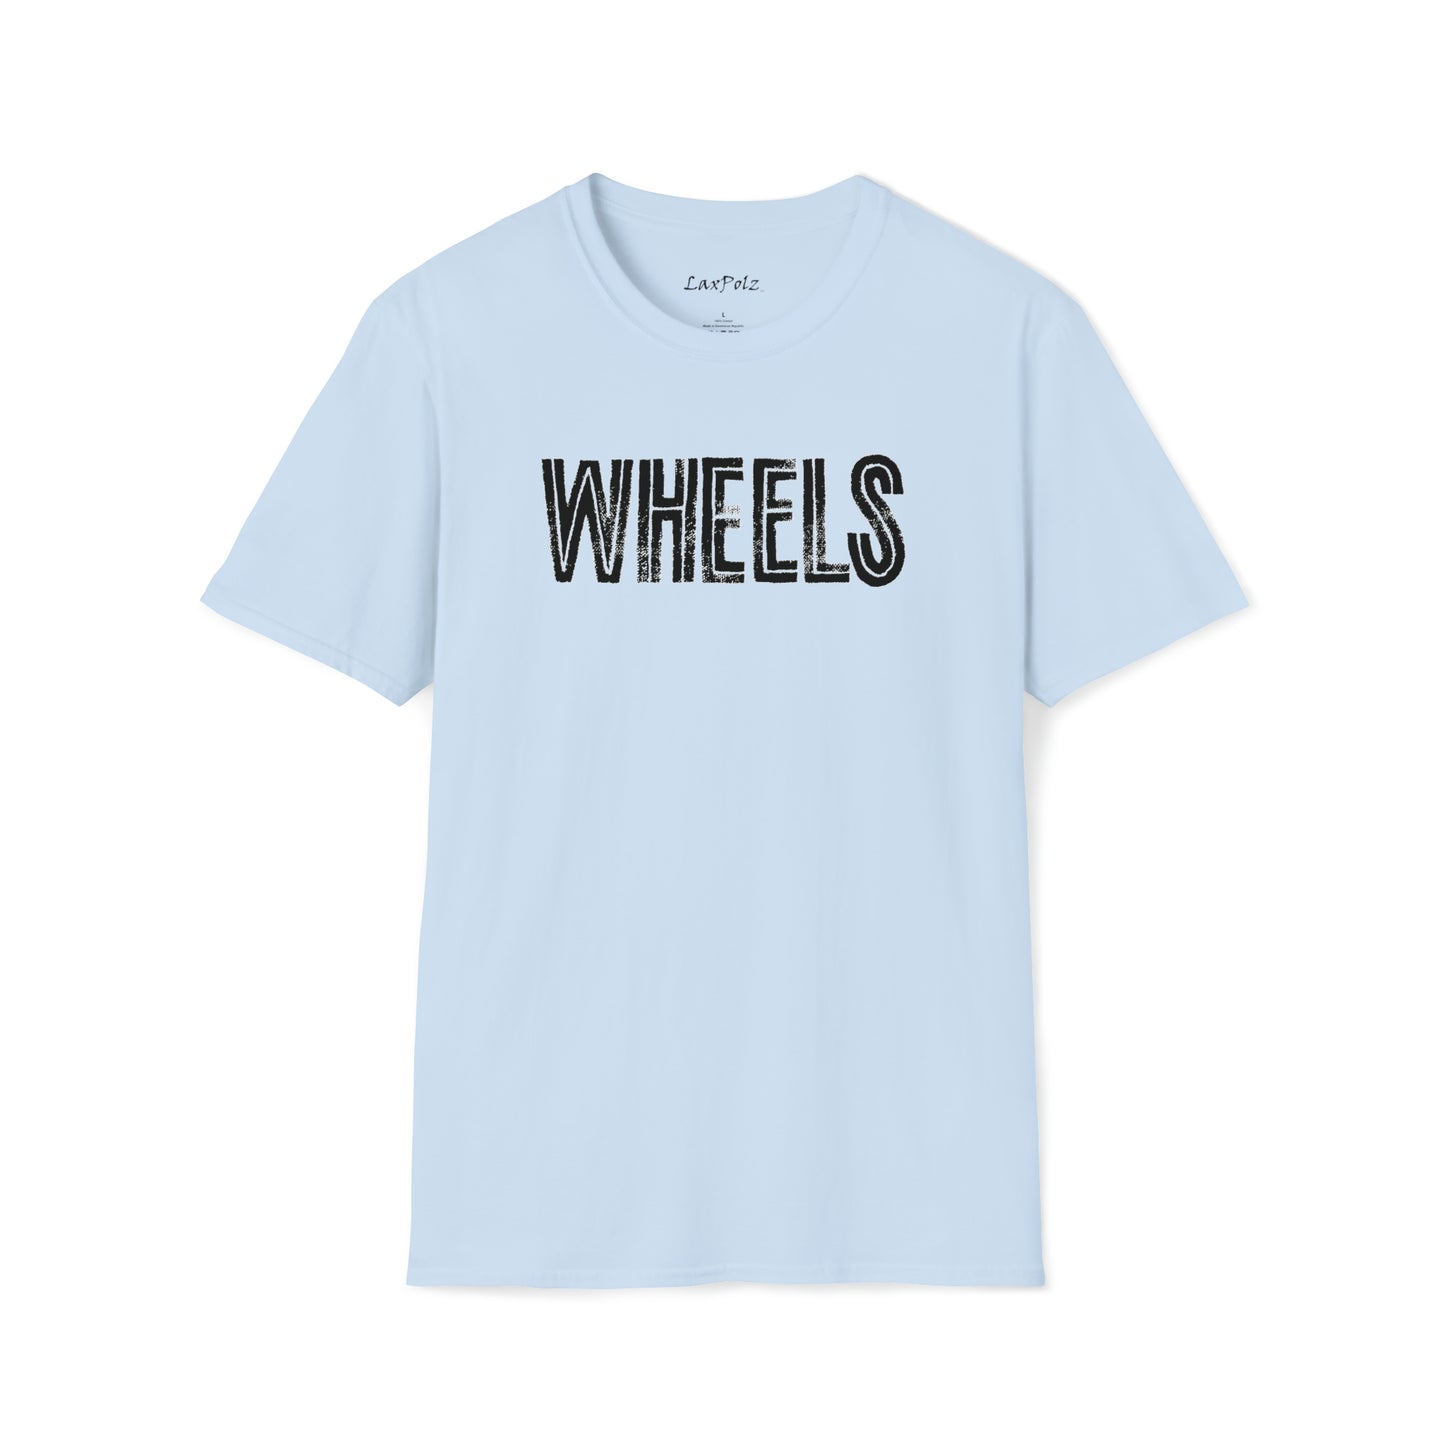 Wheels Softstyle Tee